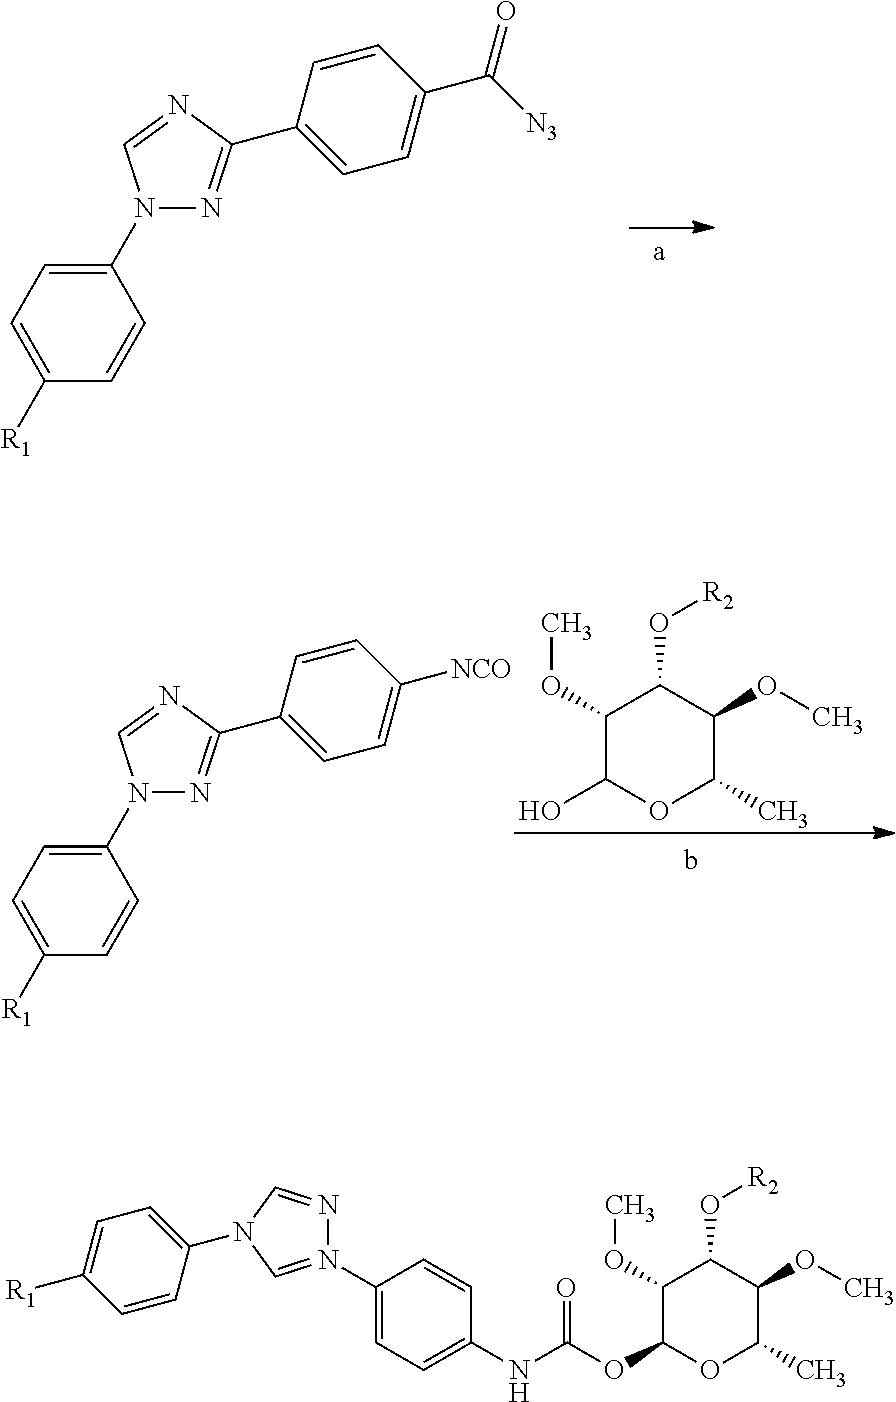 Process for preparation of 4-(1-(4-(perfluoroethoxy)phenyl)-1H-1,2,4-triazol-3-yl)benzoyl azide